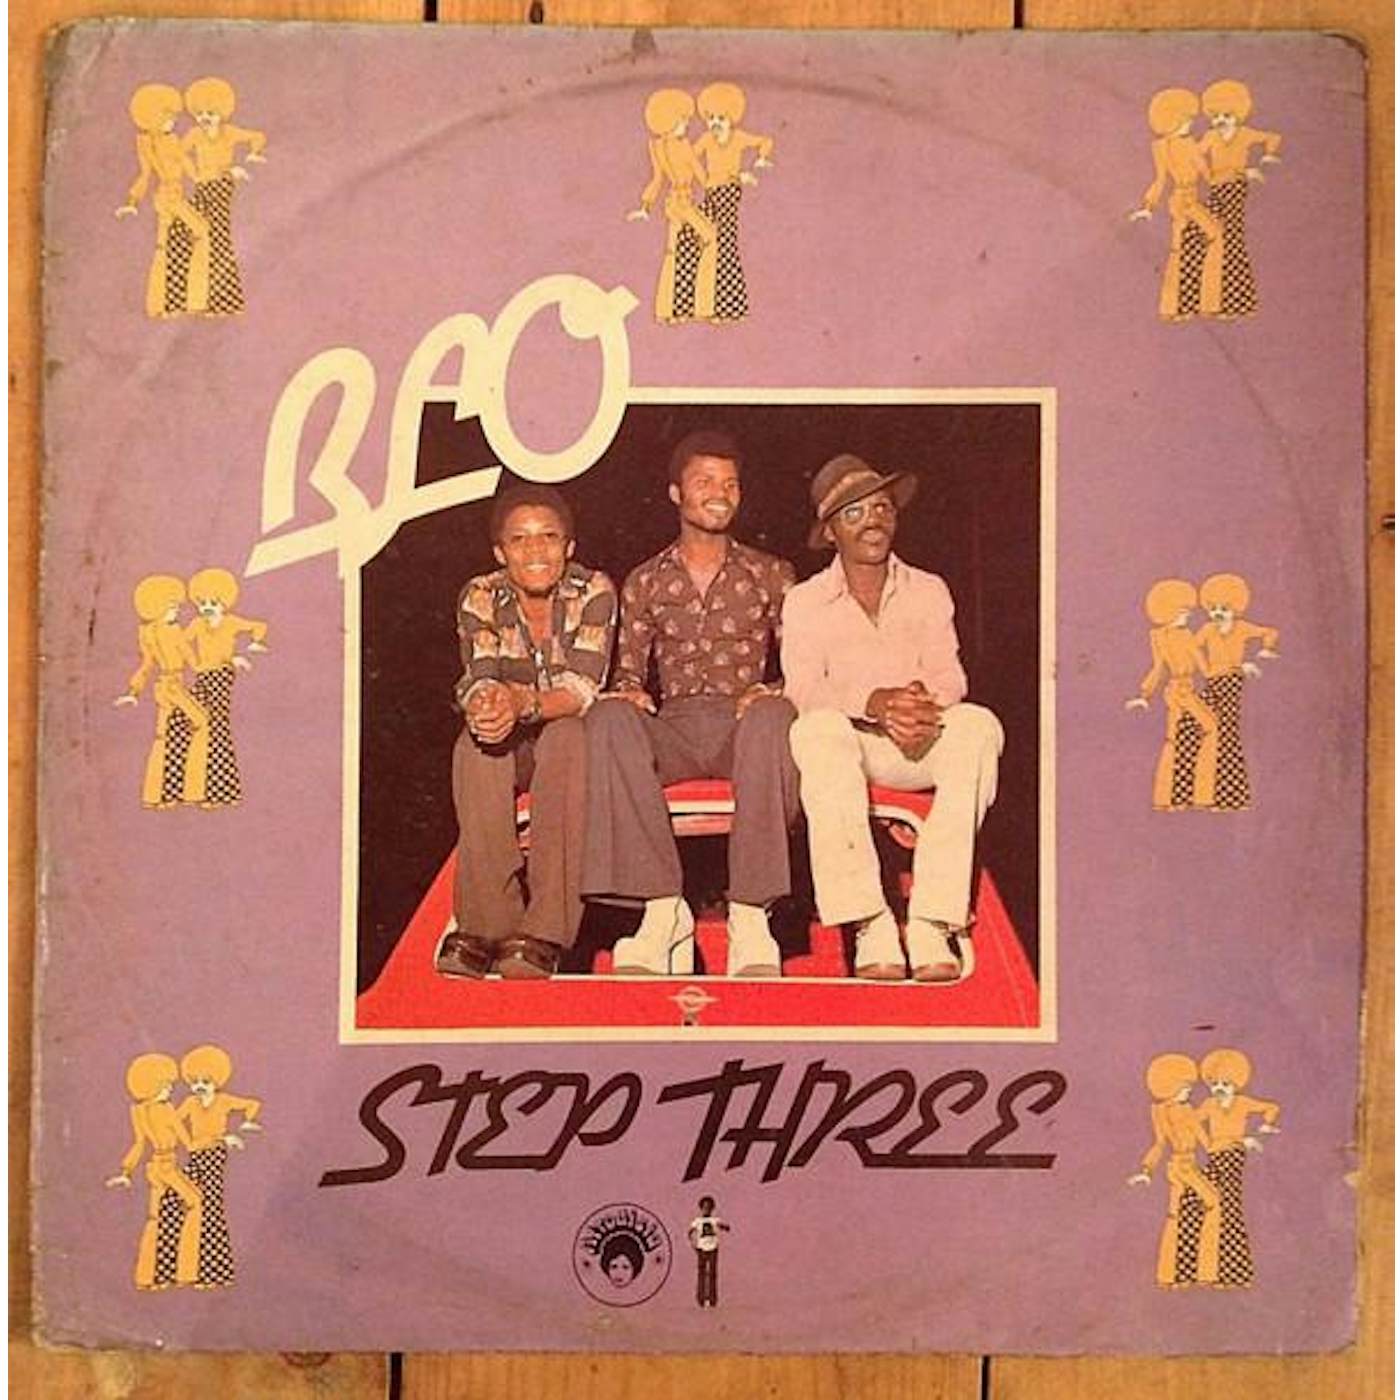 BLO STEP THREE Vinyl Record